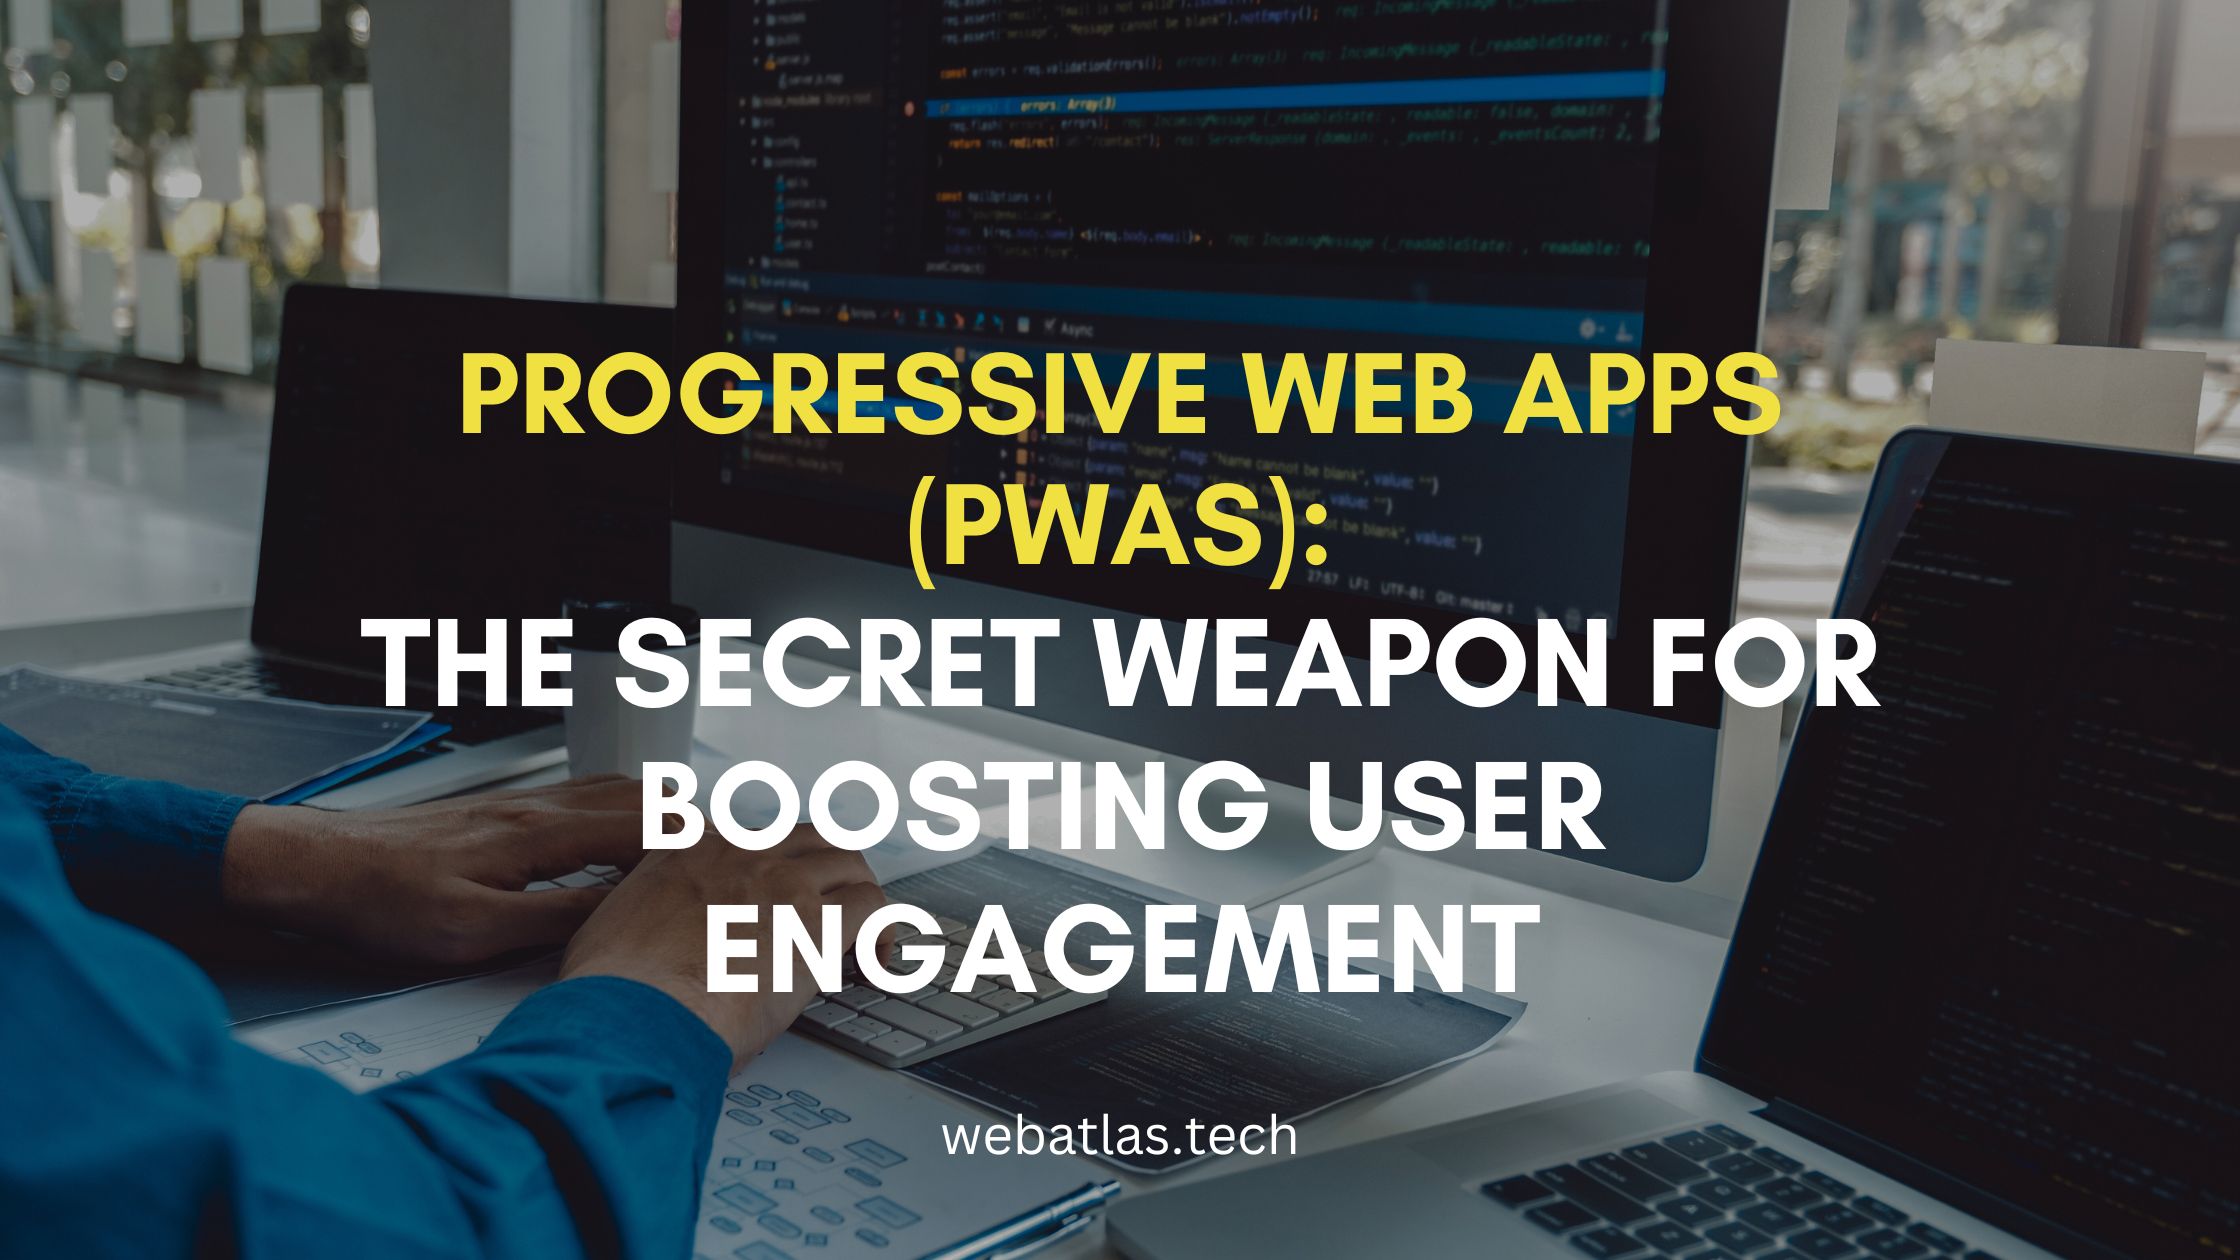 Progressive Web Apps (PWAs) development